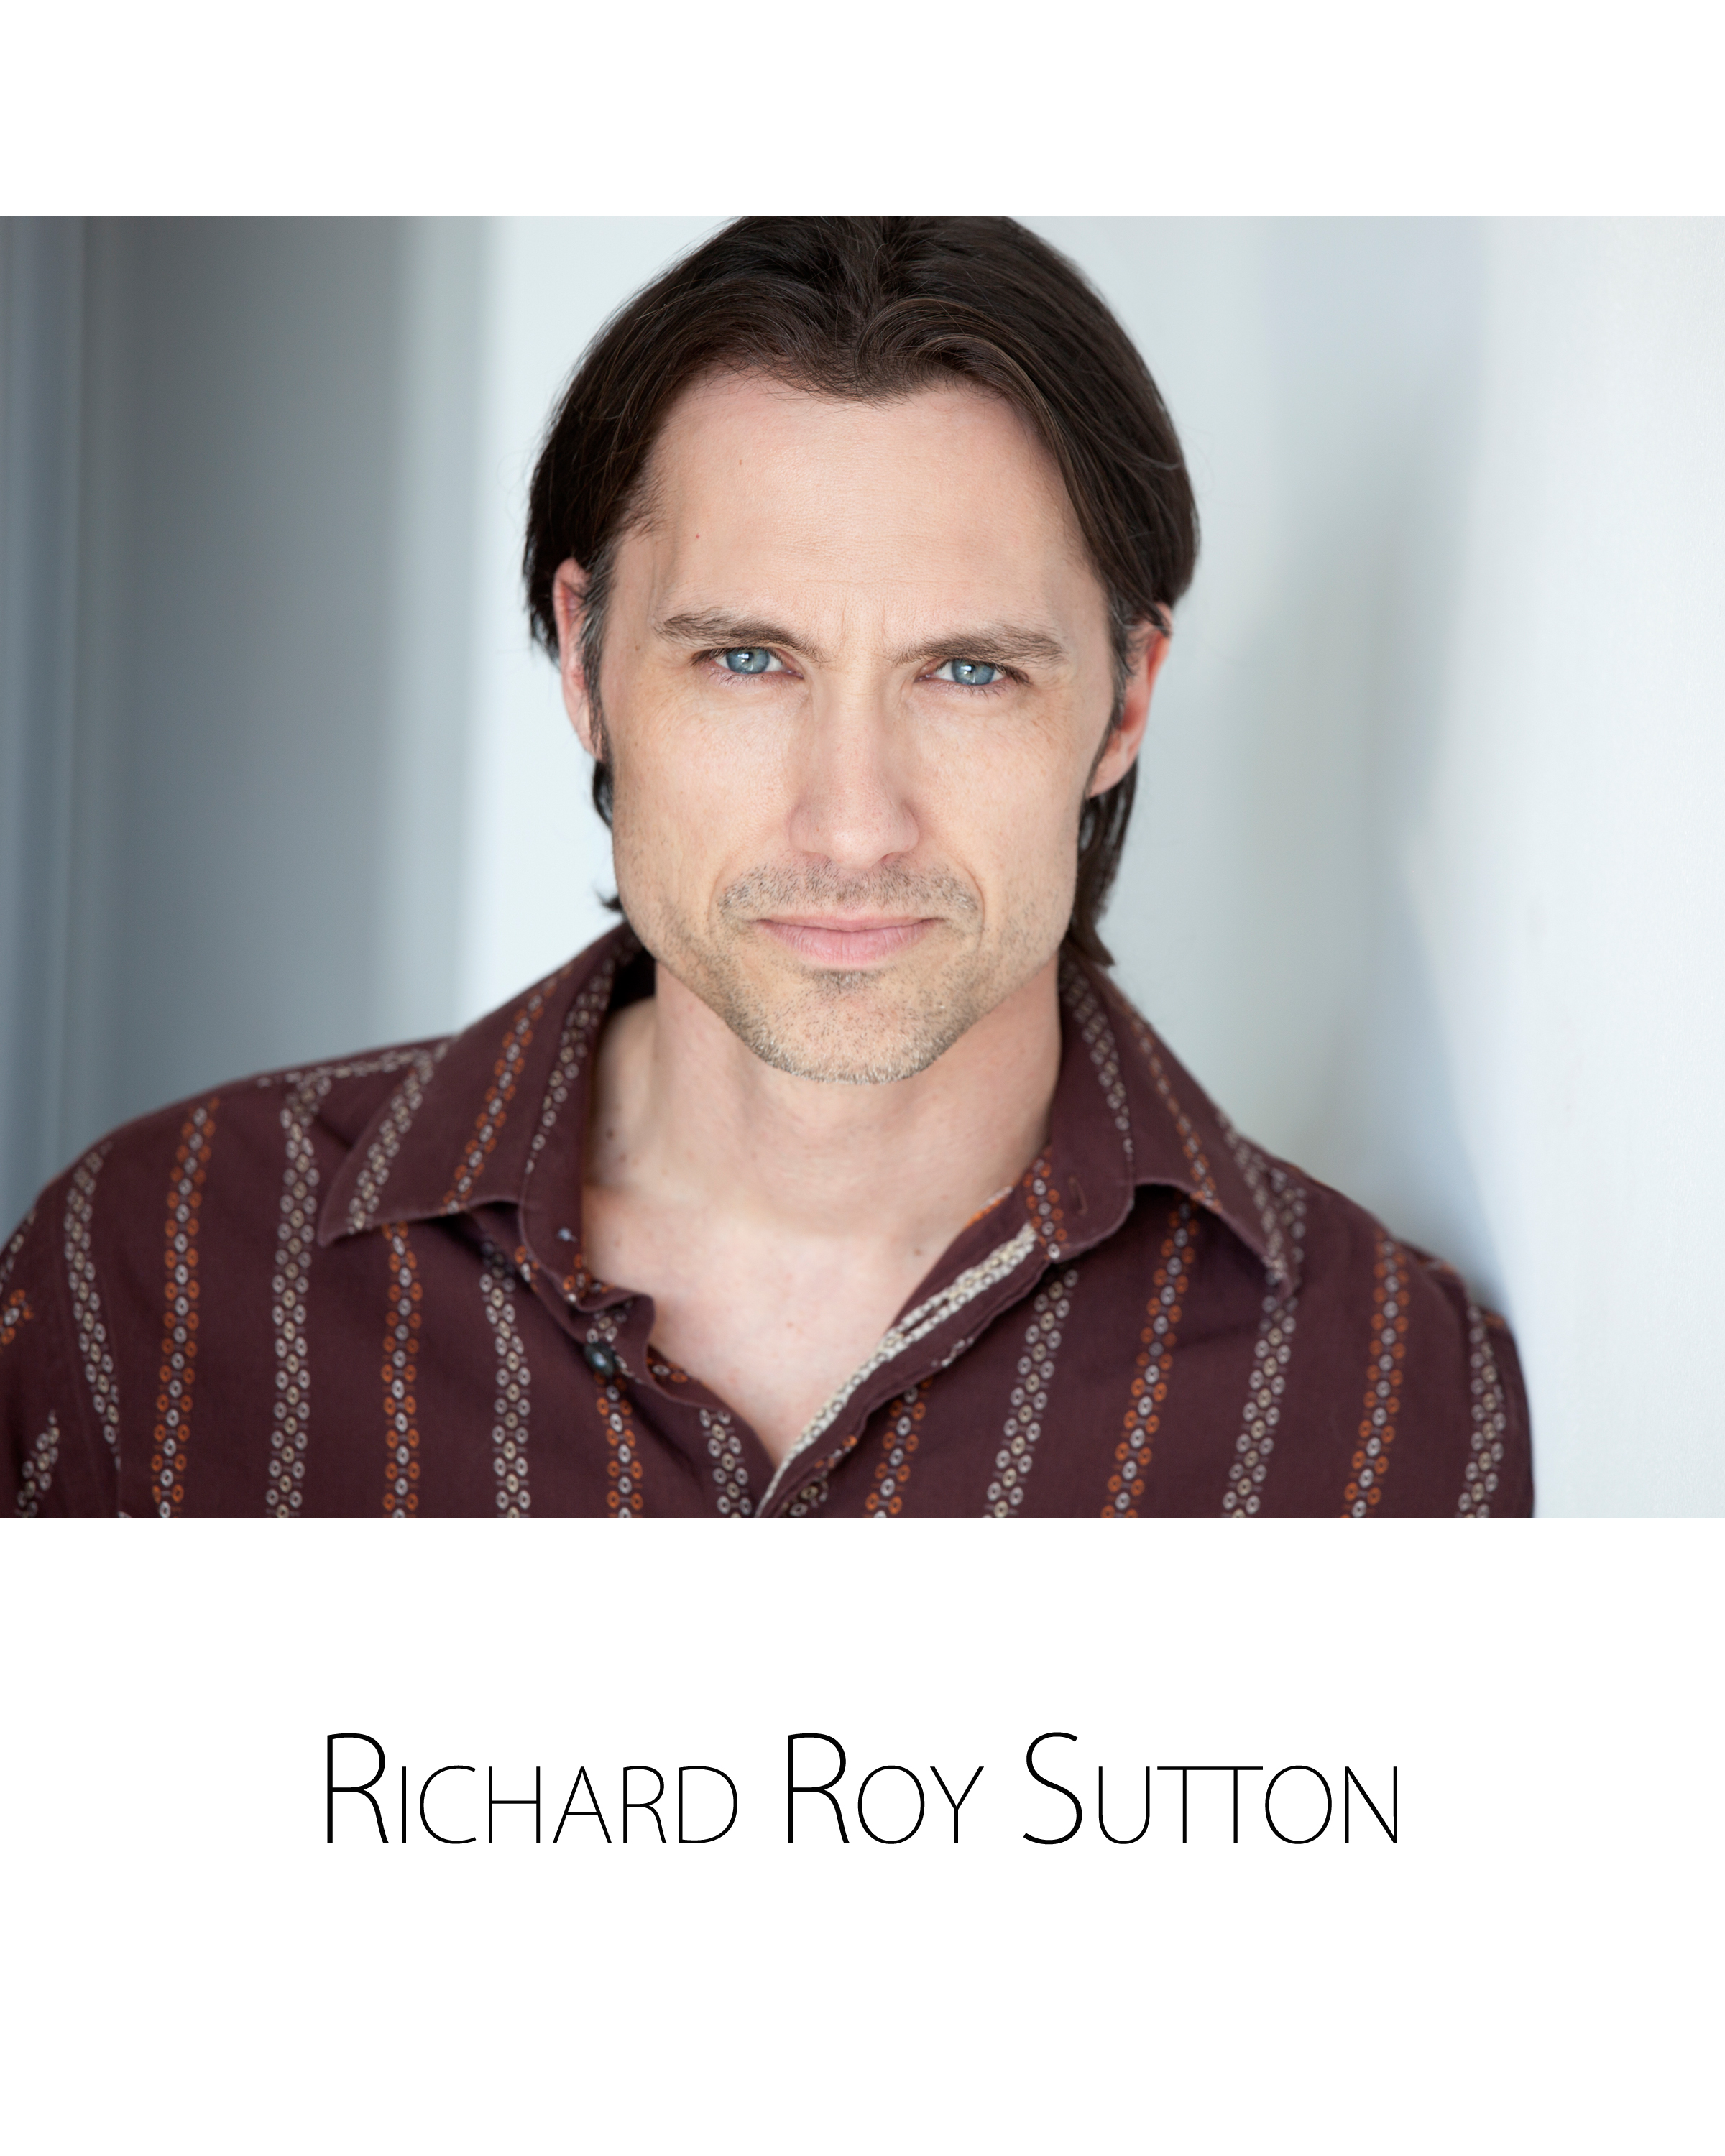 Richard Roy Sutton